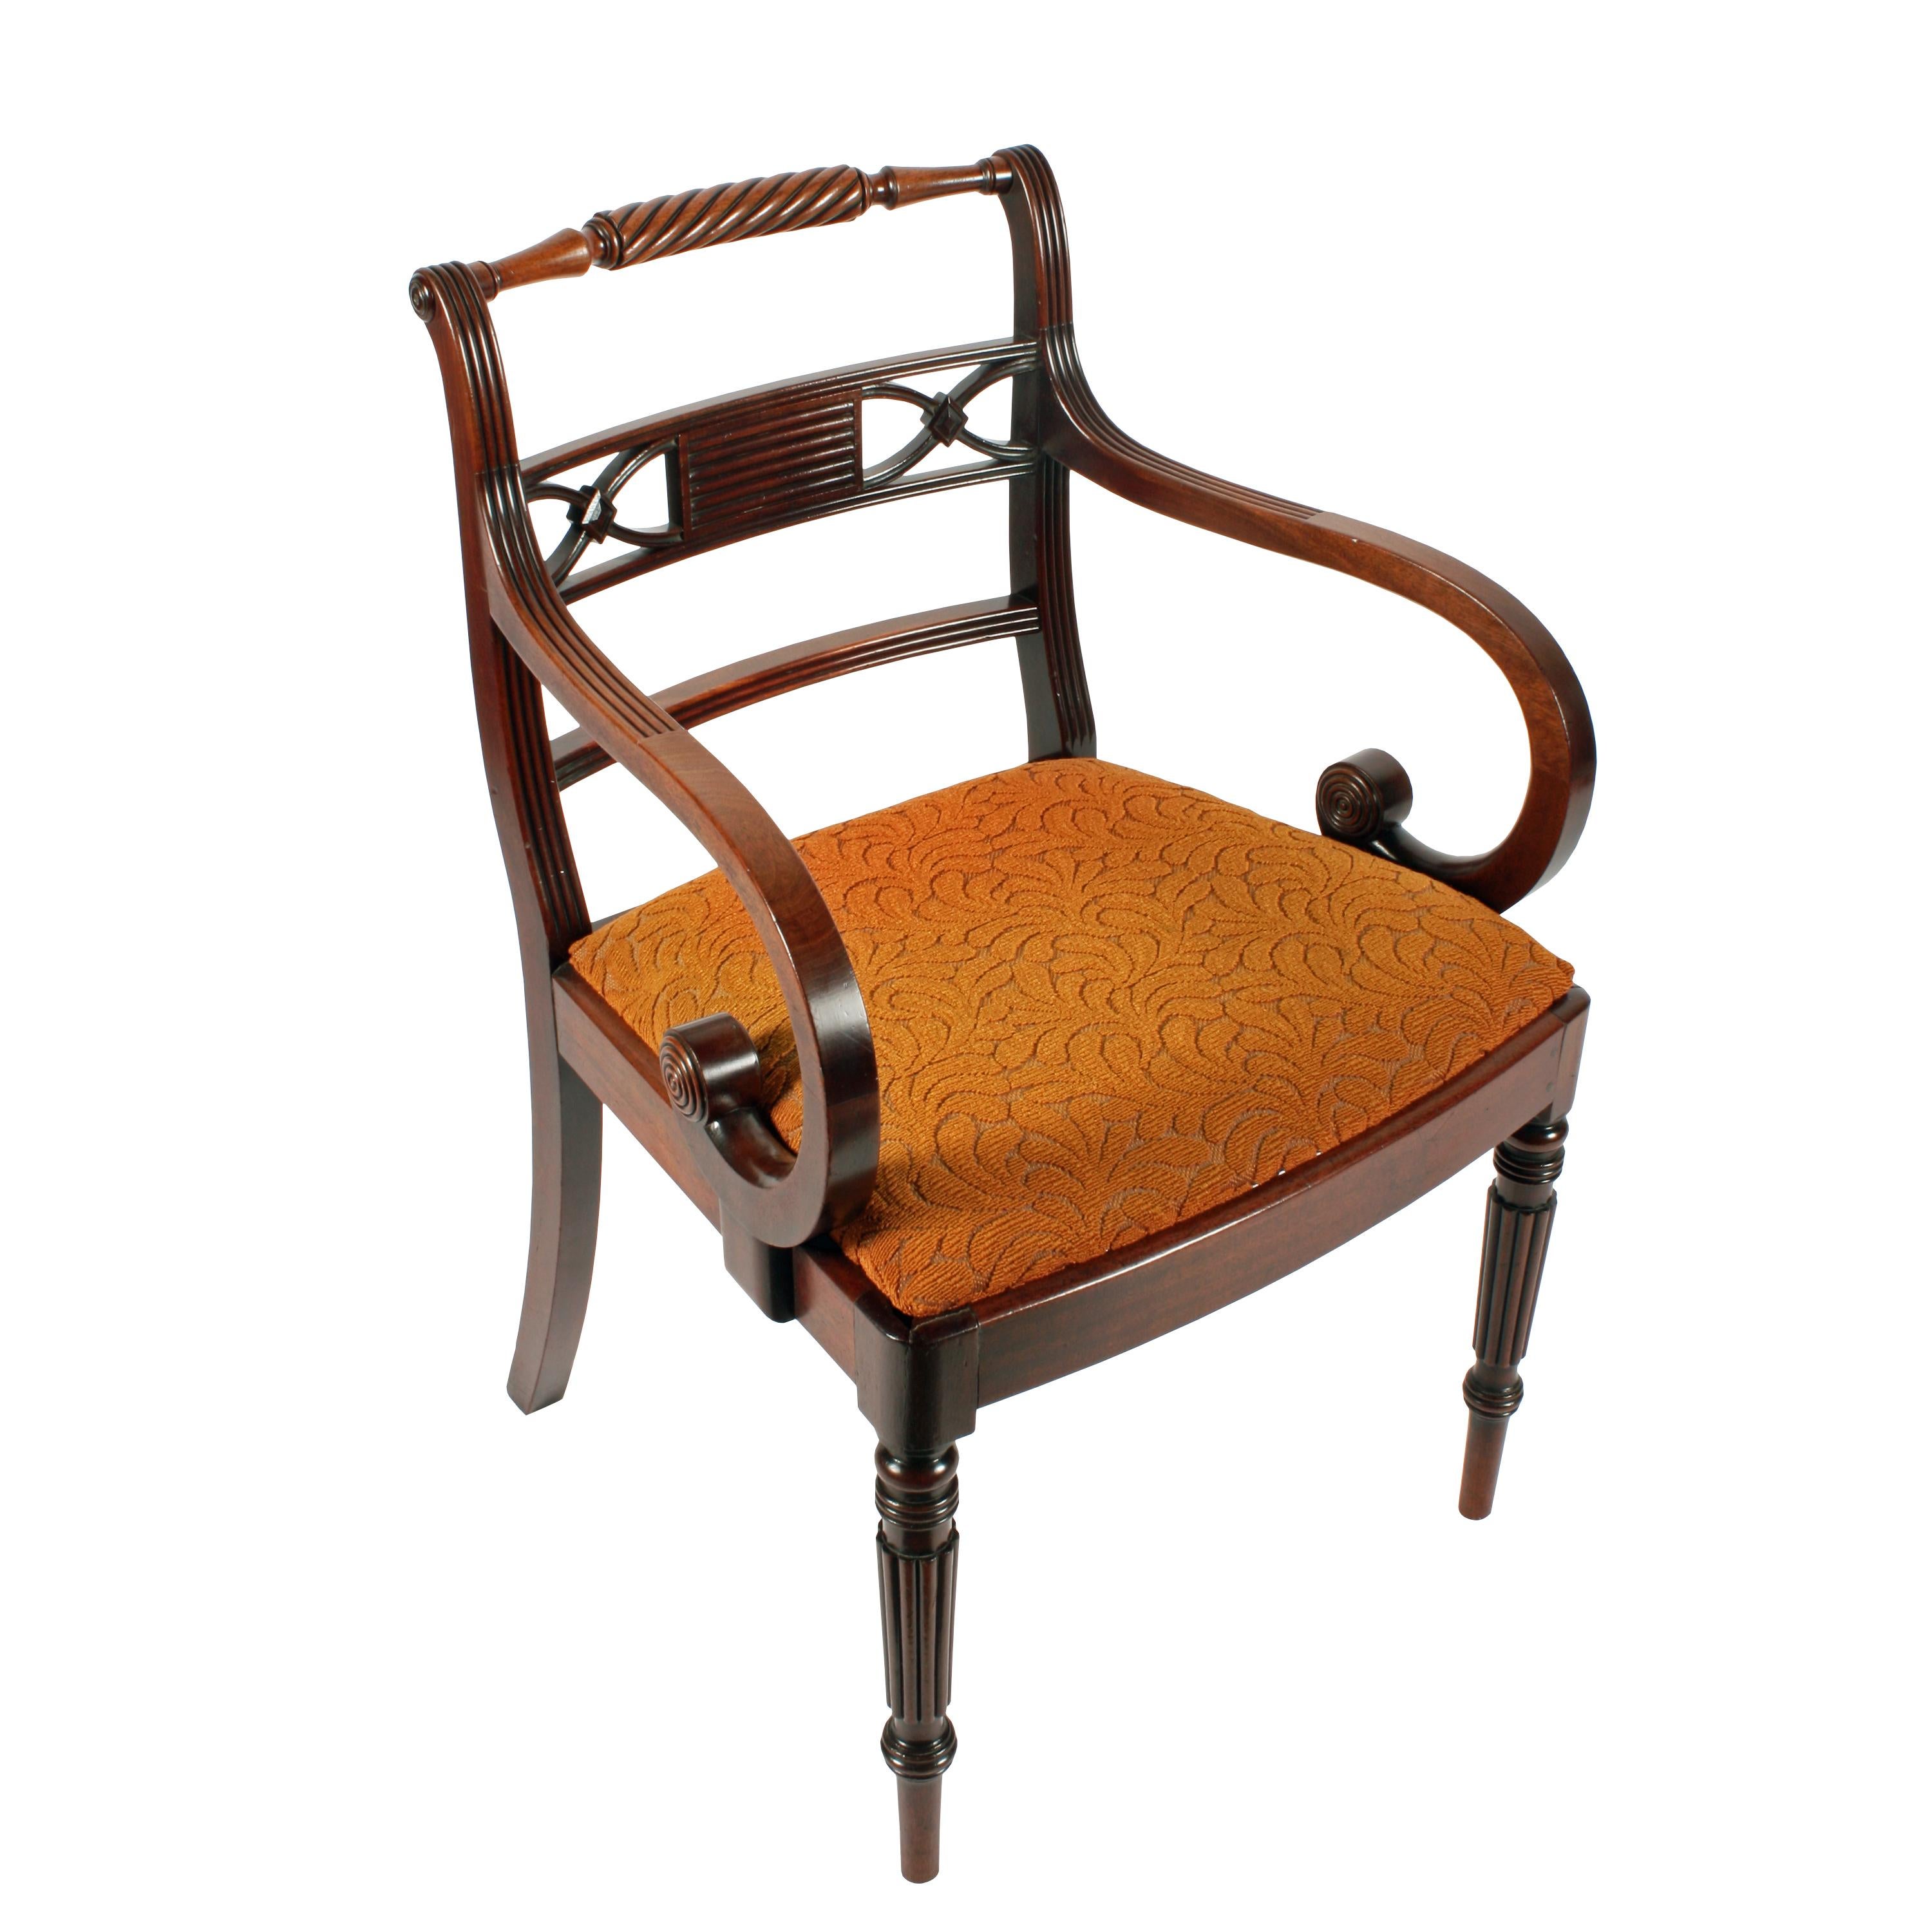 Regency 'Gillows' Design Elbow Chair